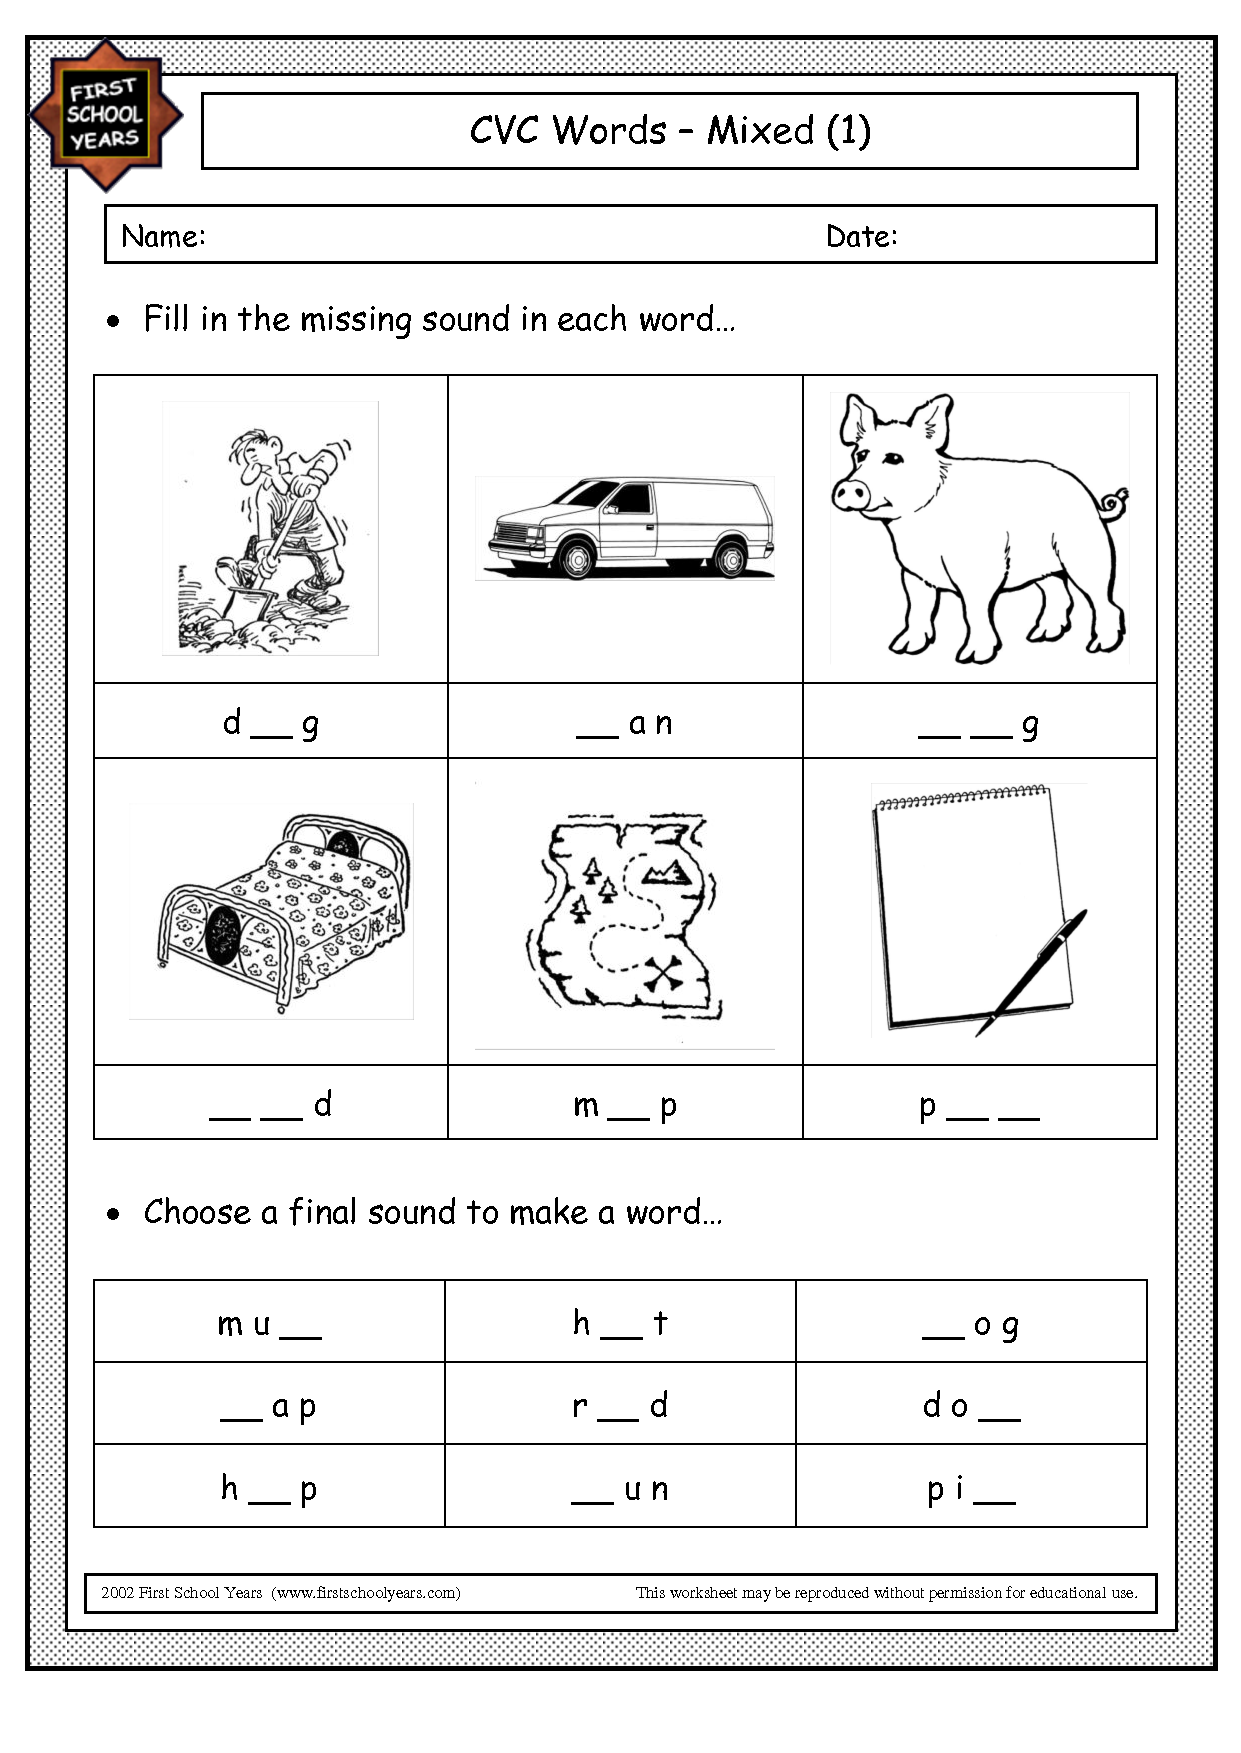 cvc-words-tracing-worksheets-alphabetworksheetsfreecom-15